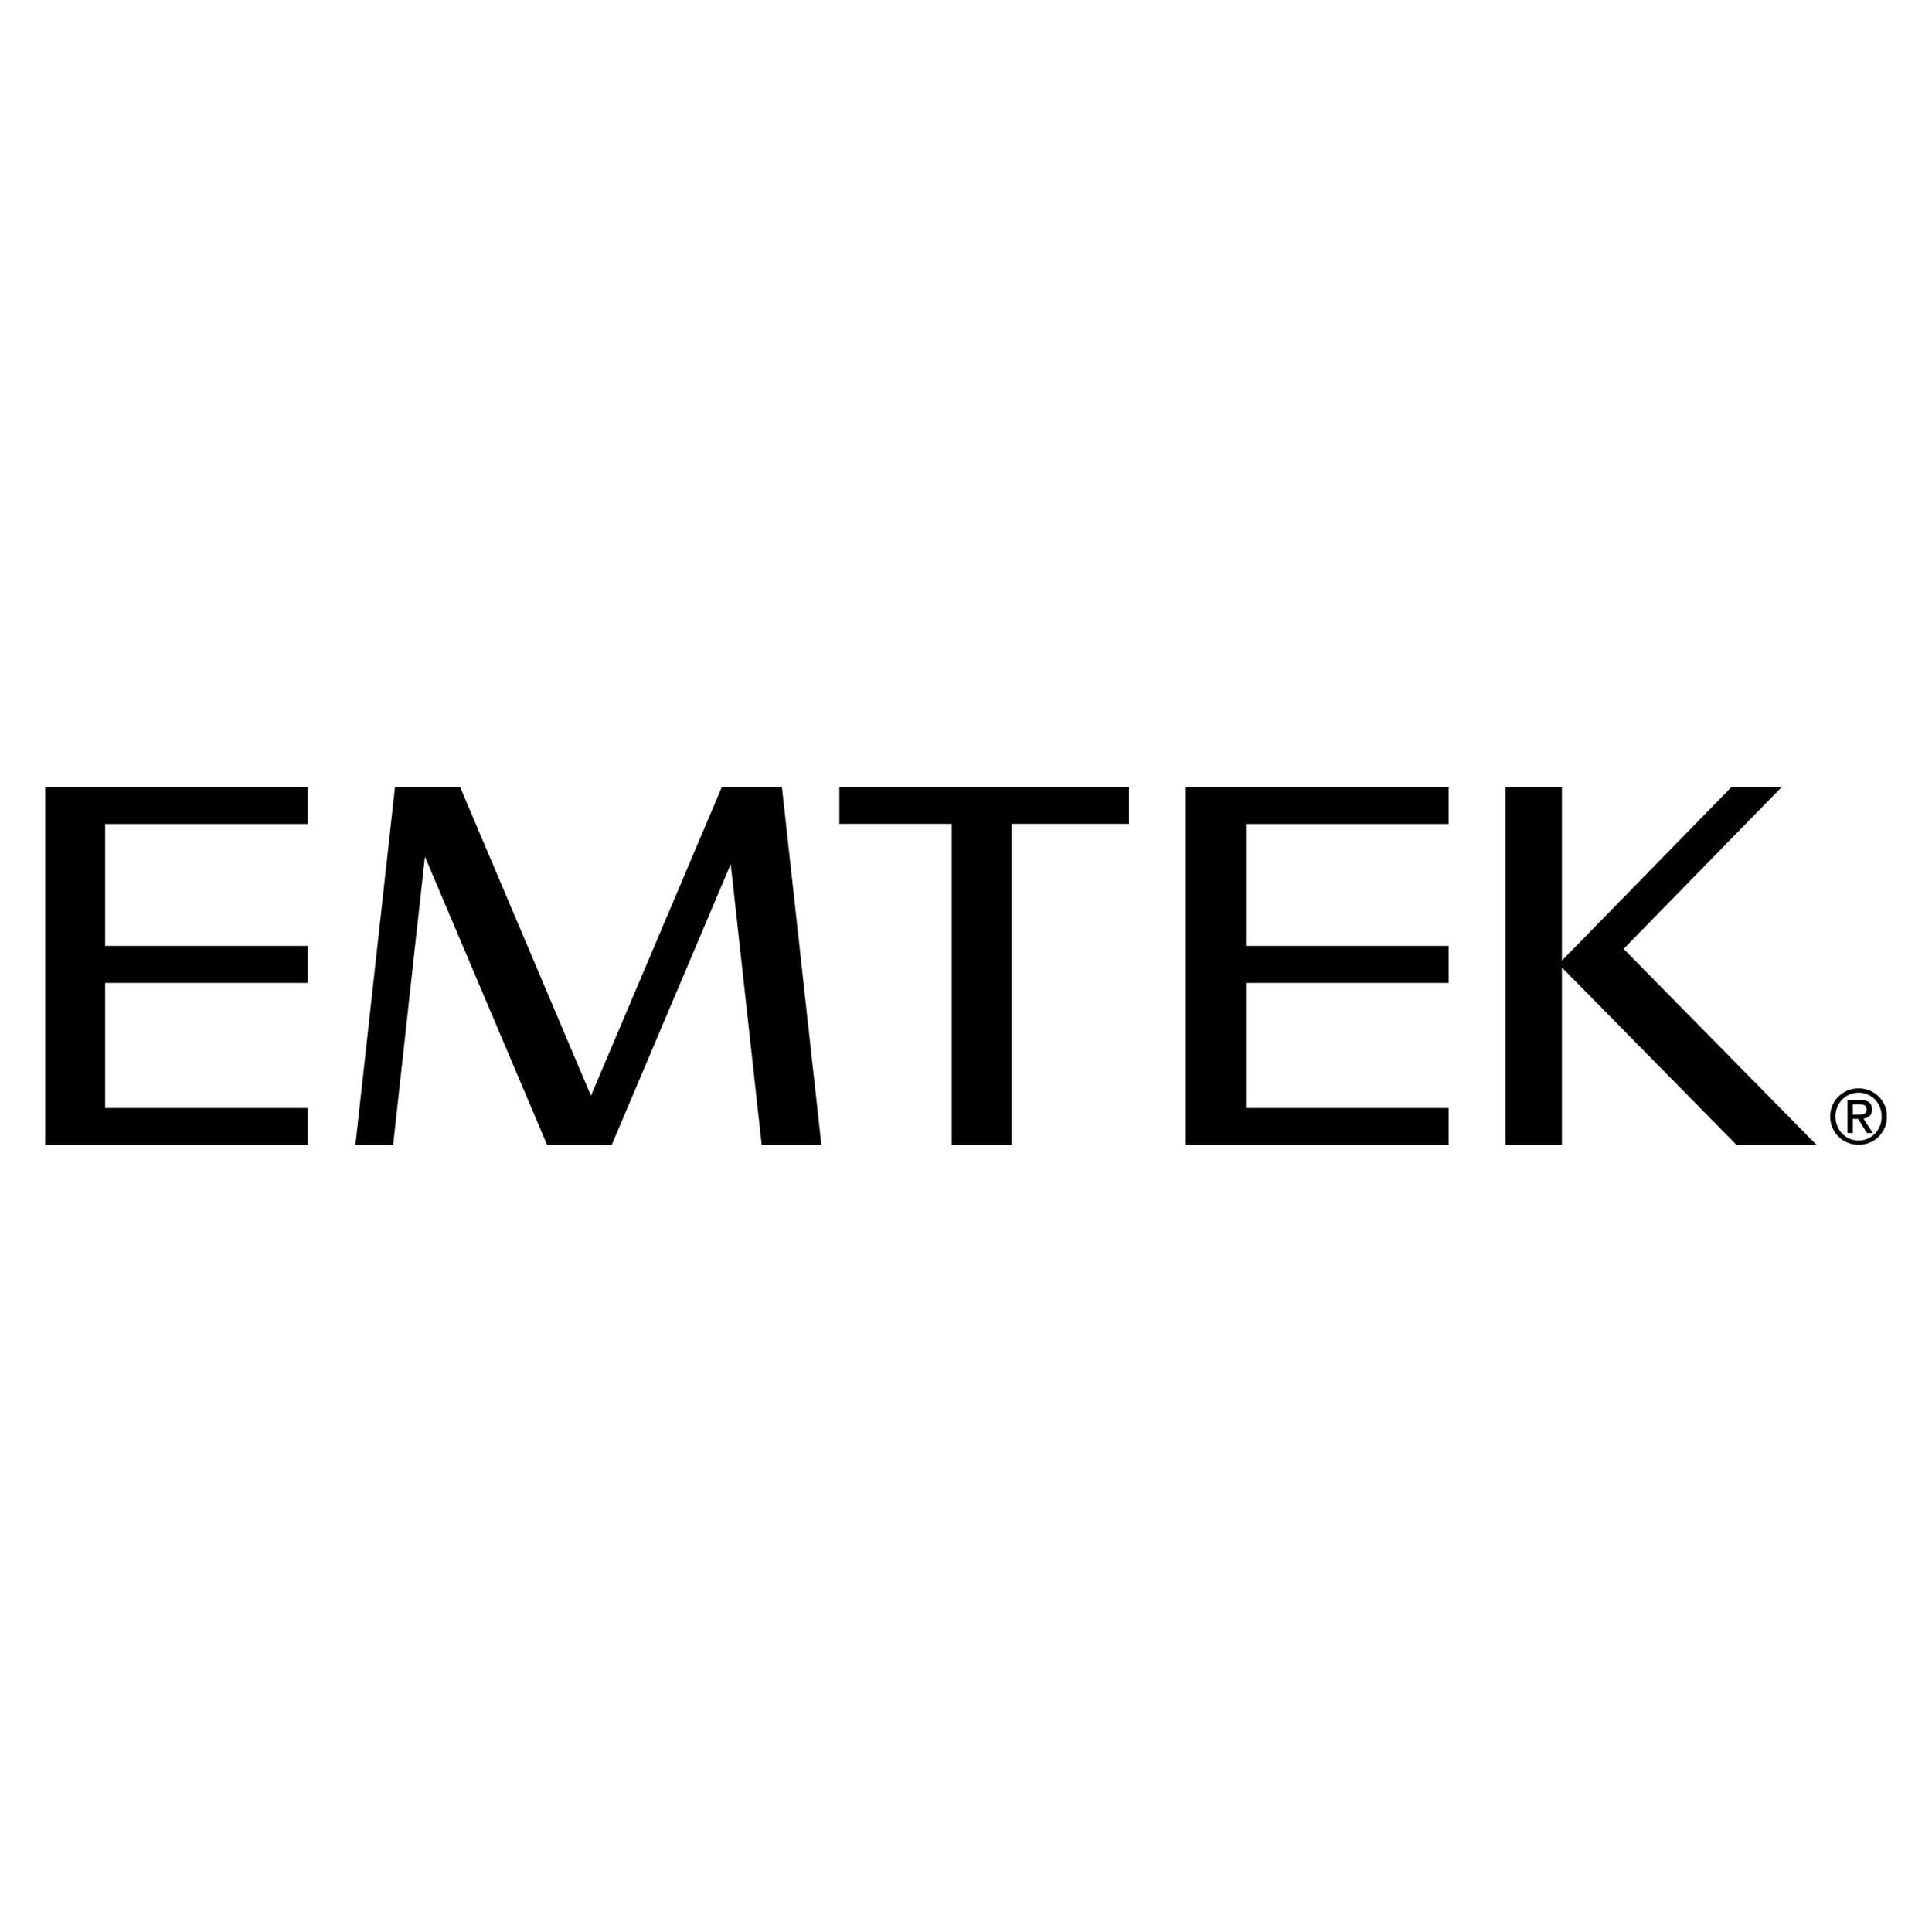 Emtek Logo.jpg